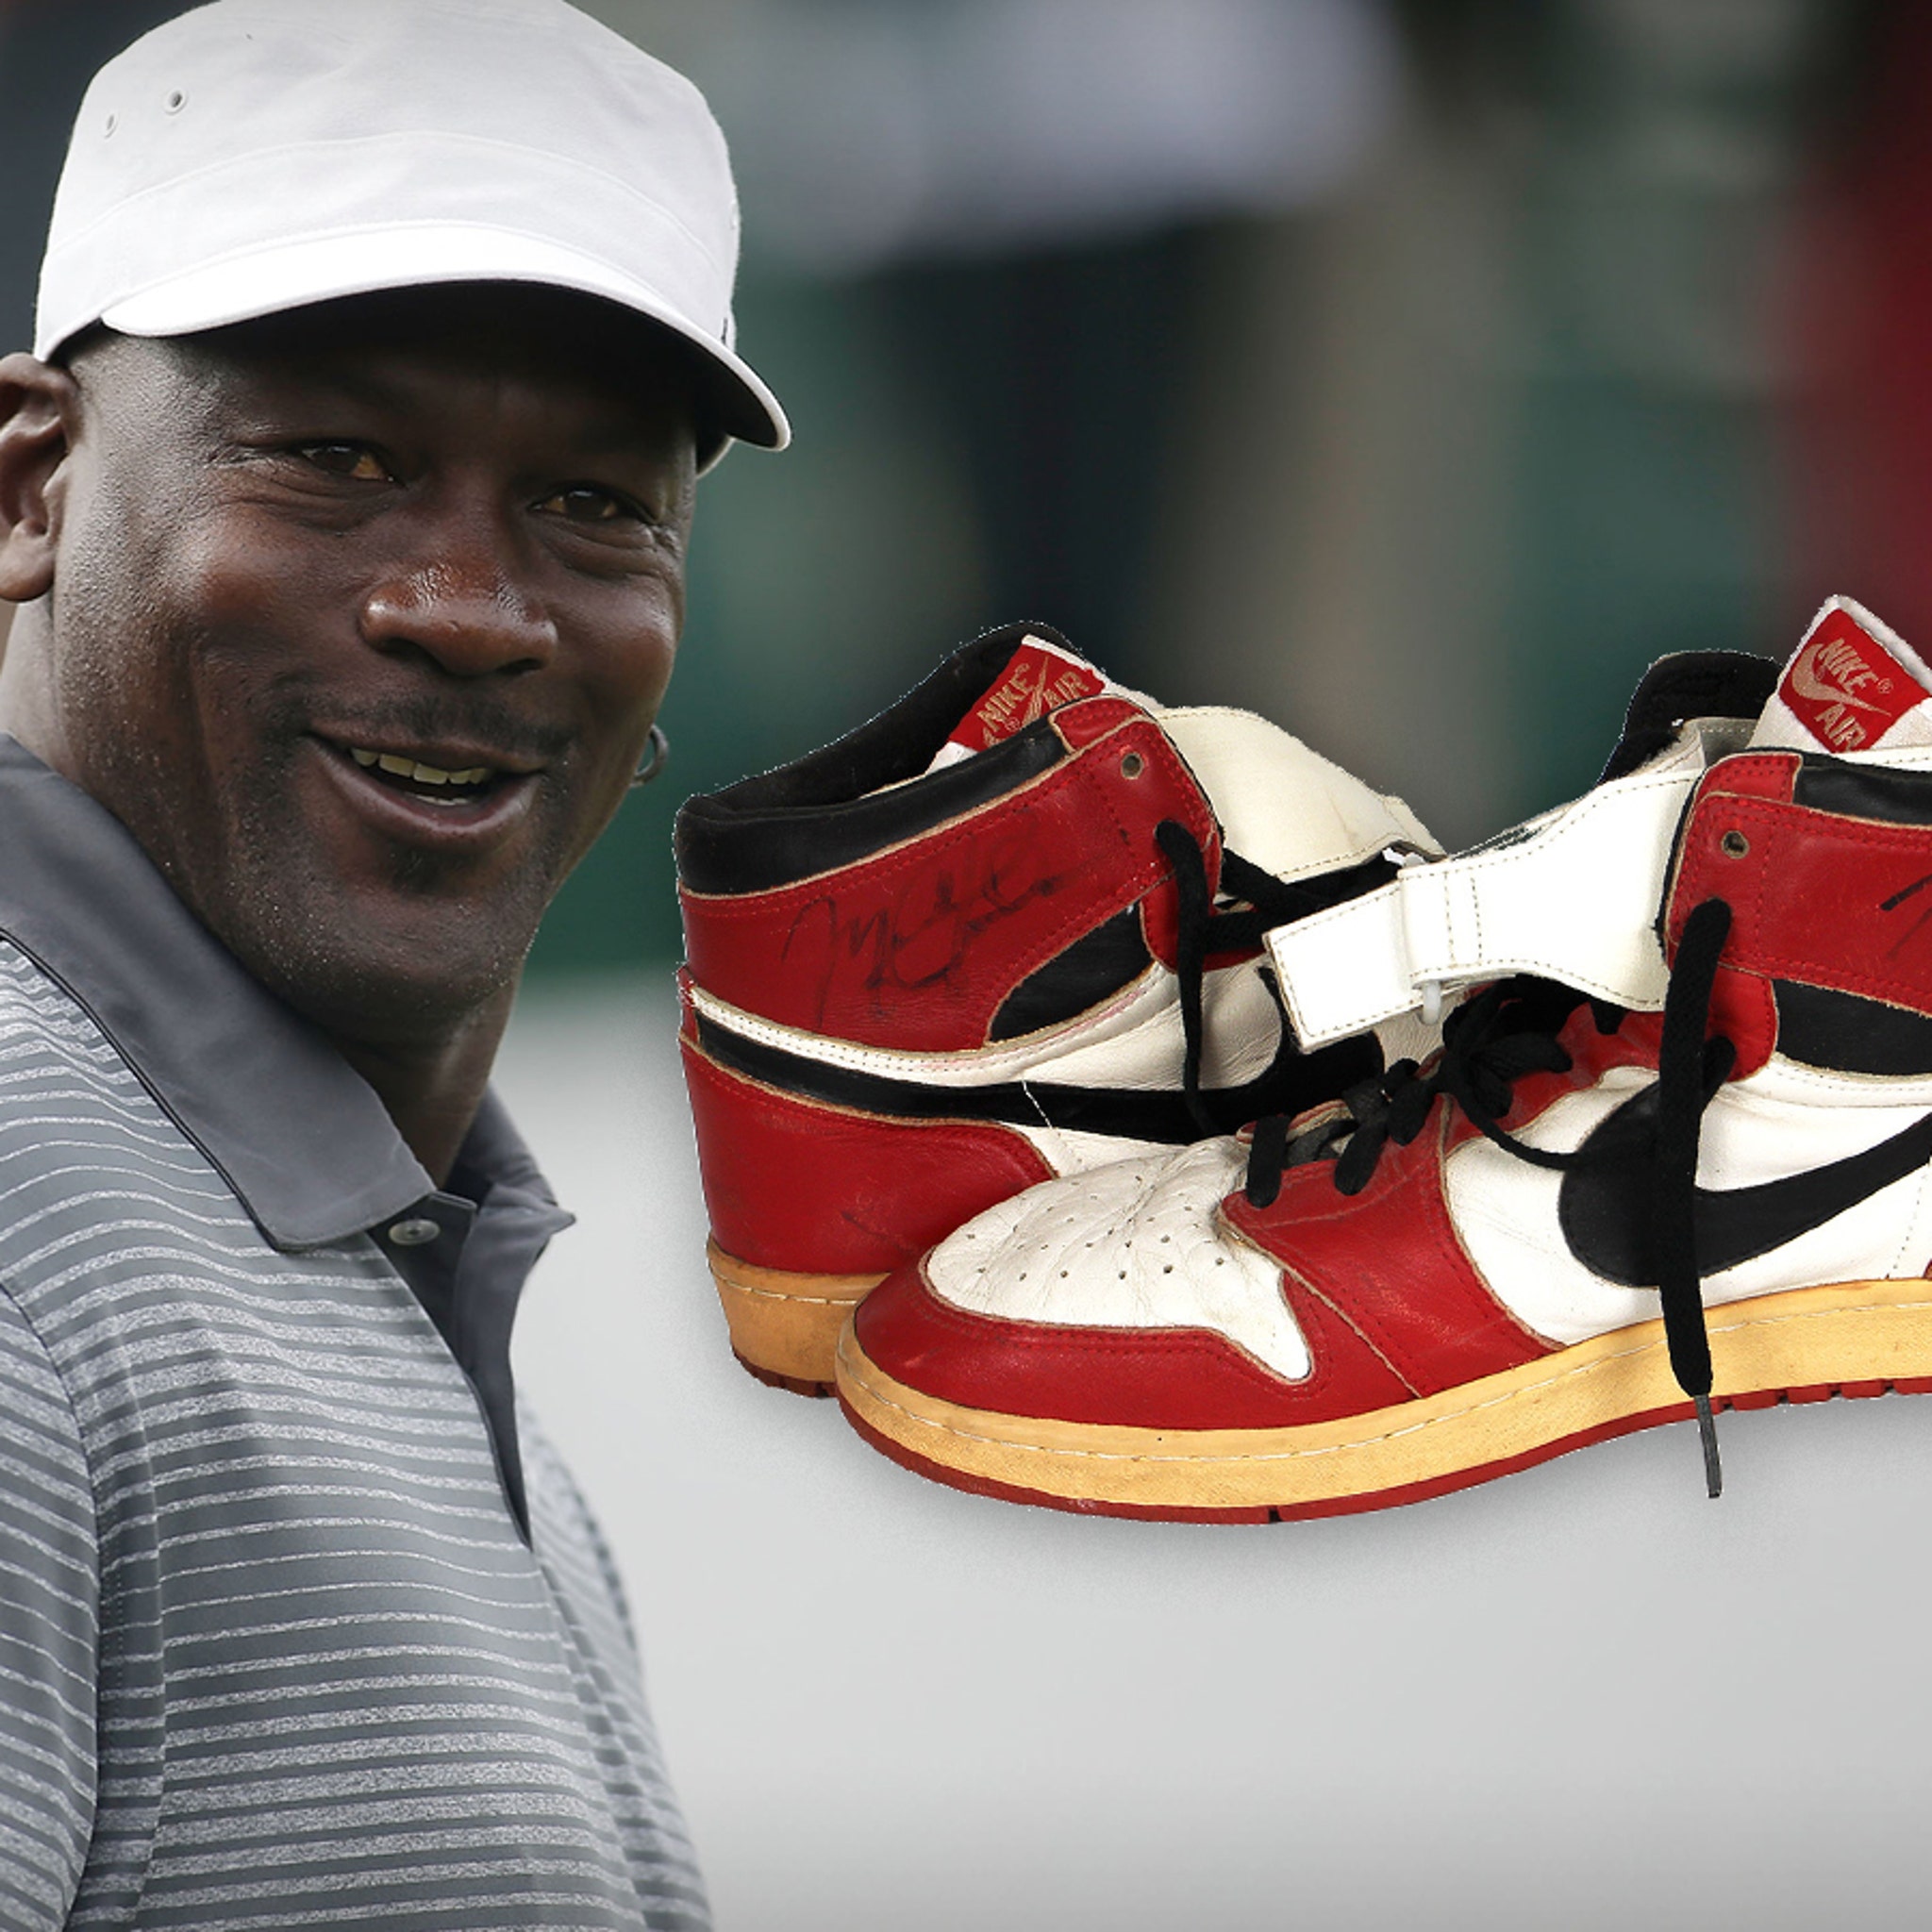 platform Venlighed lanthan Michael Jordan Custom Game-Worn Air Jordans Hit Auction, Could Fetch $500k